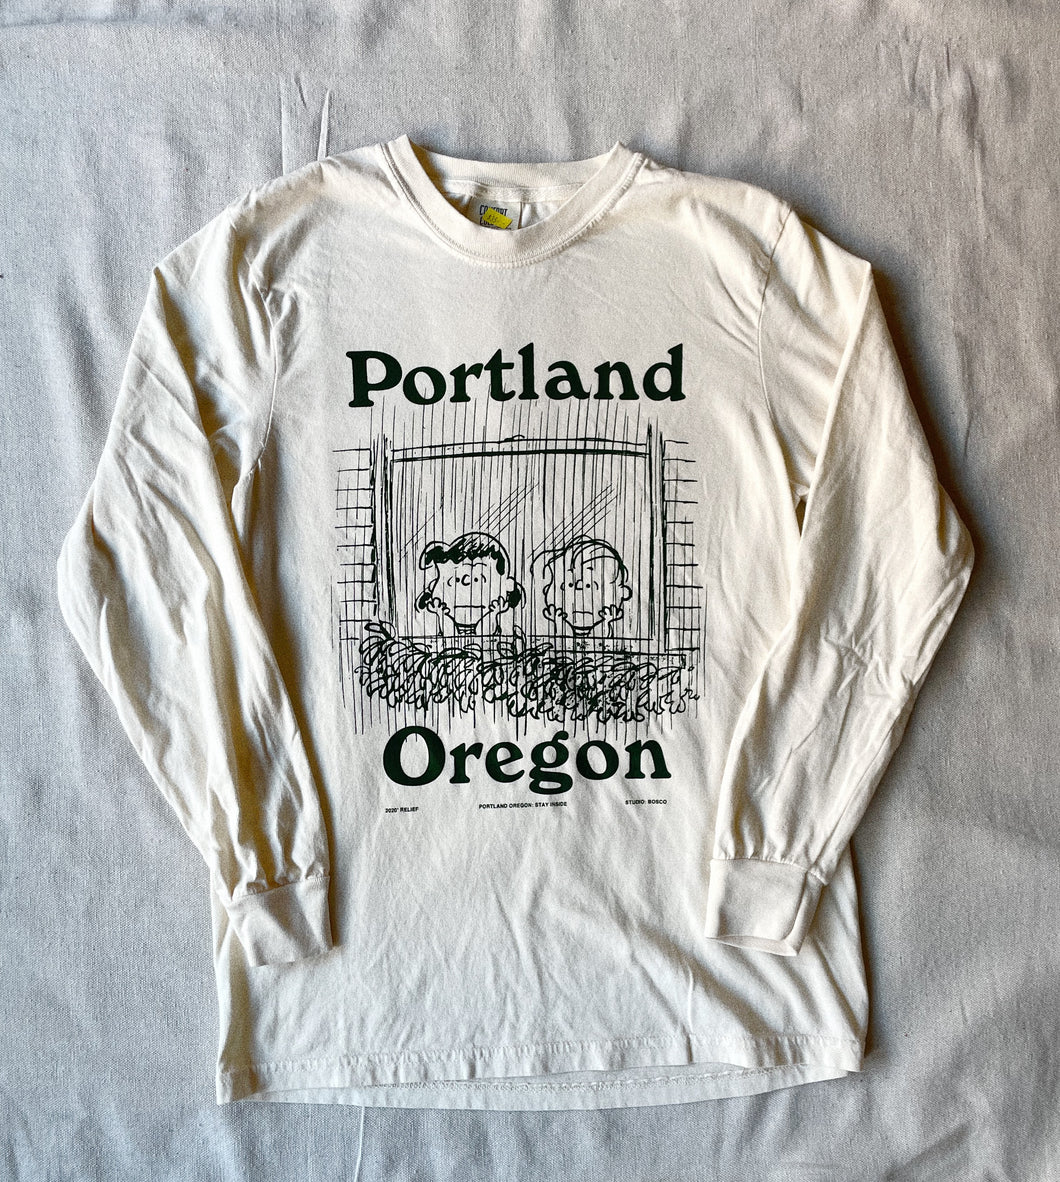 Portland Oregon Long sleeve Tee Shirt by Bosco Picard